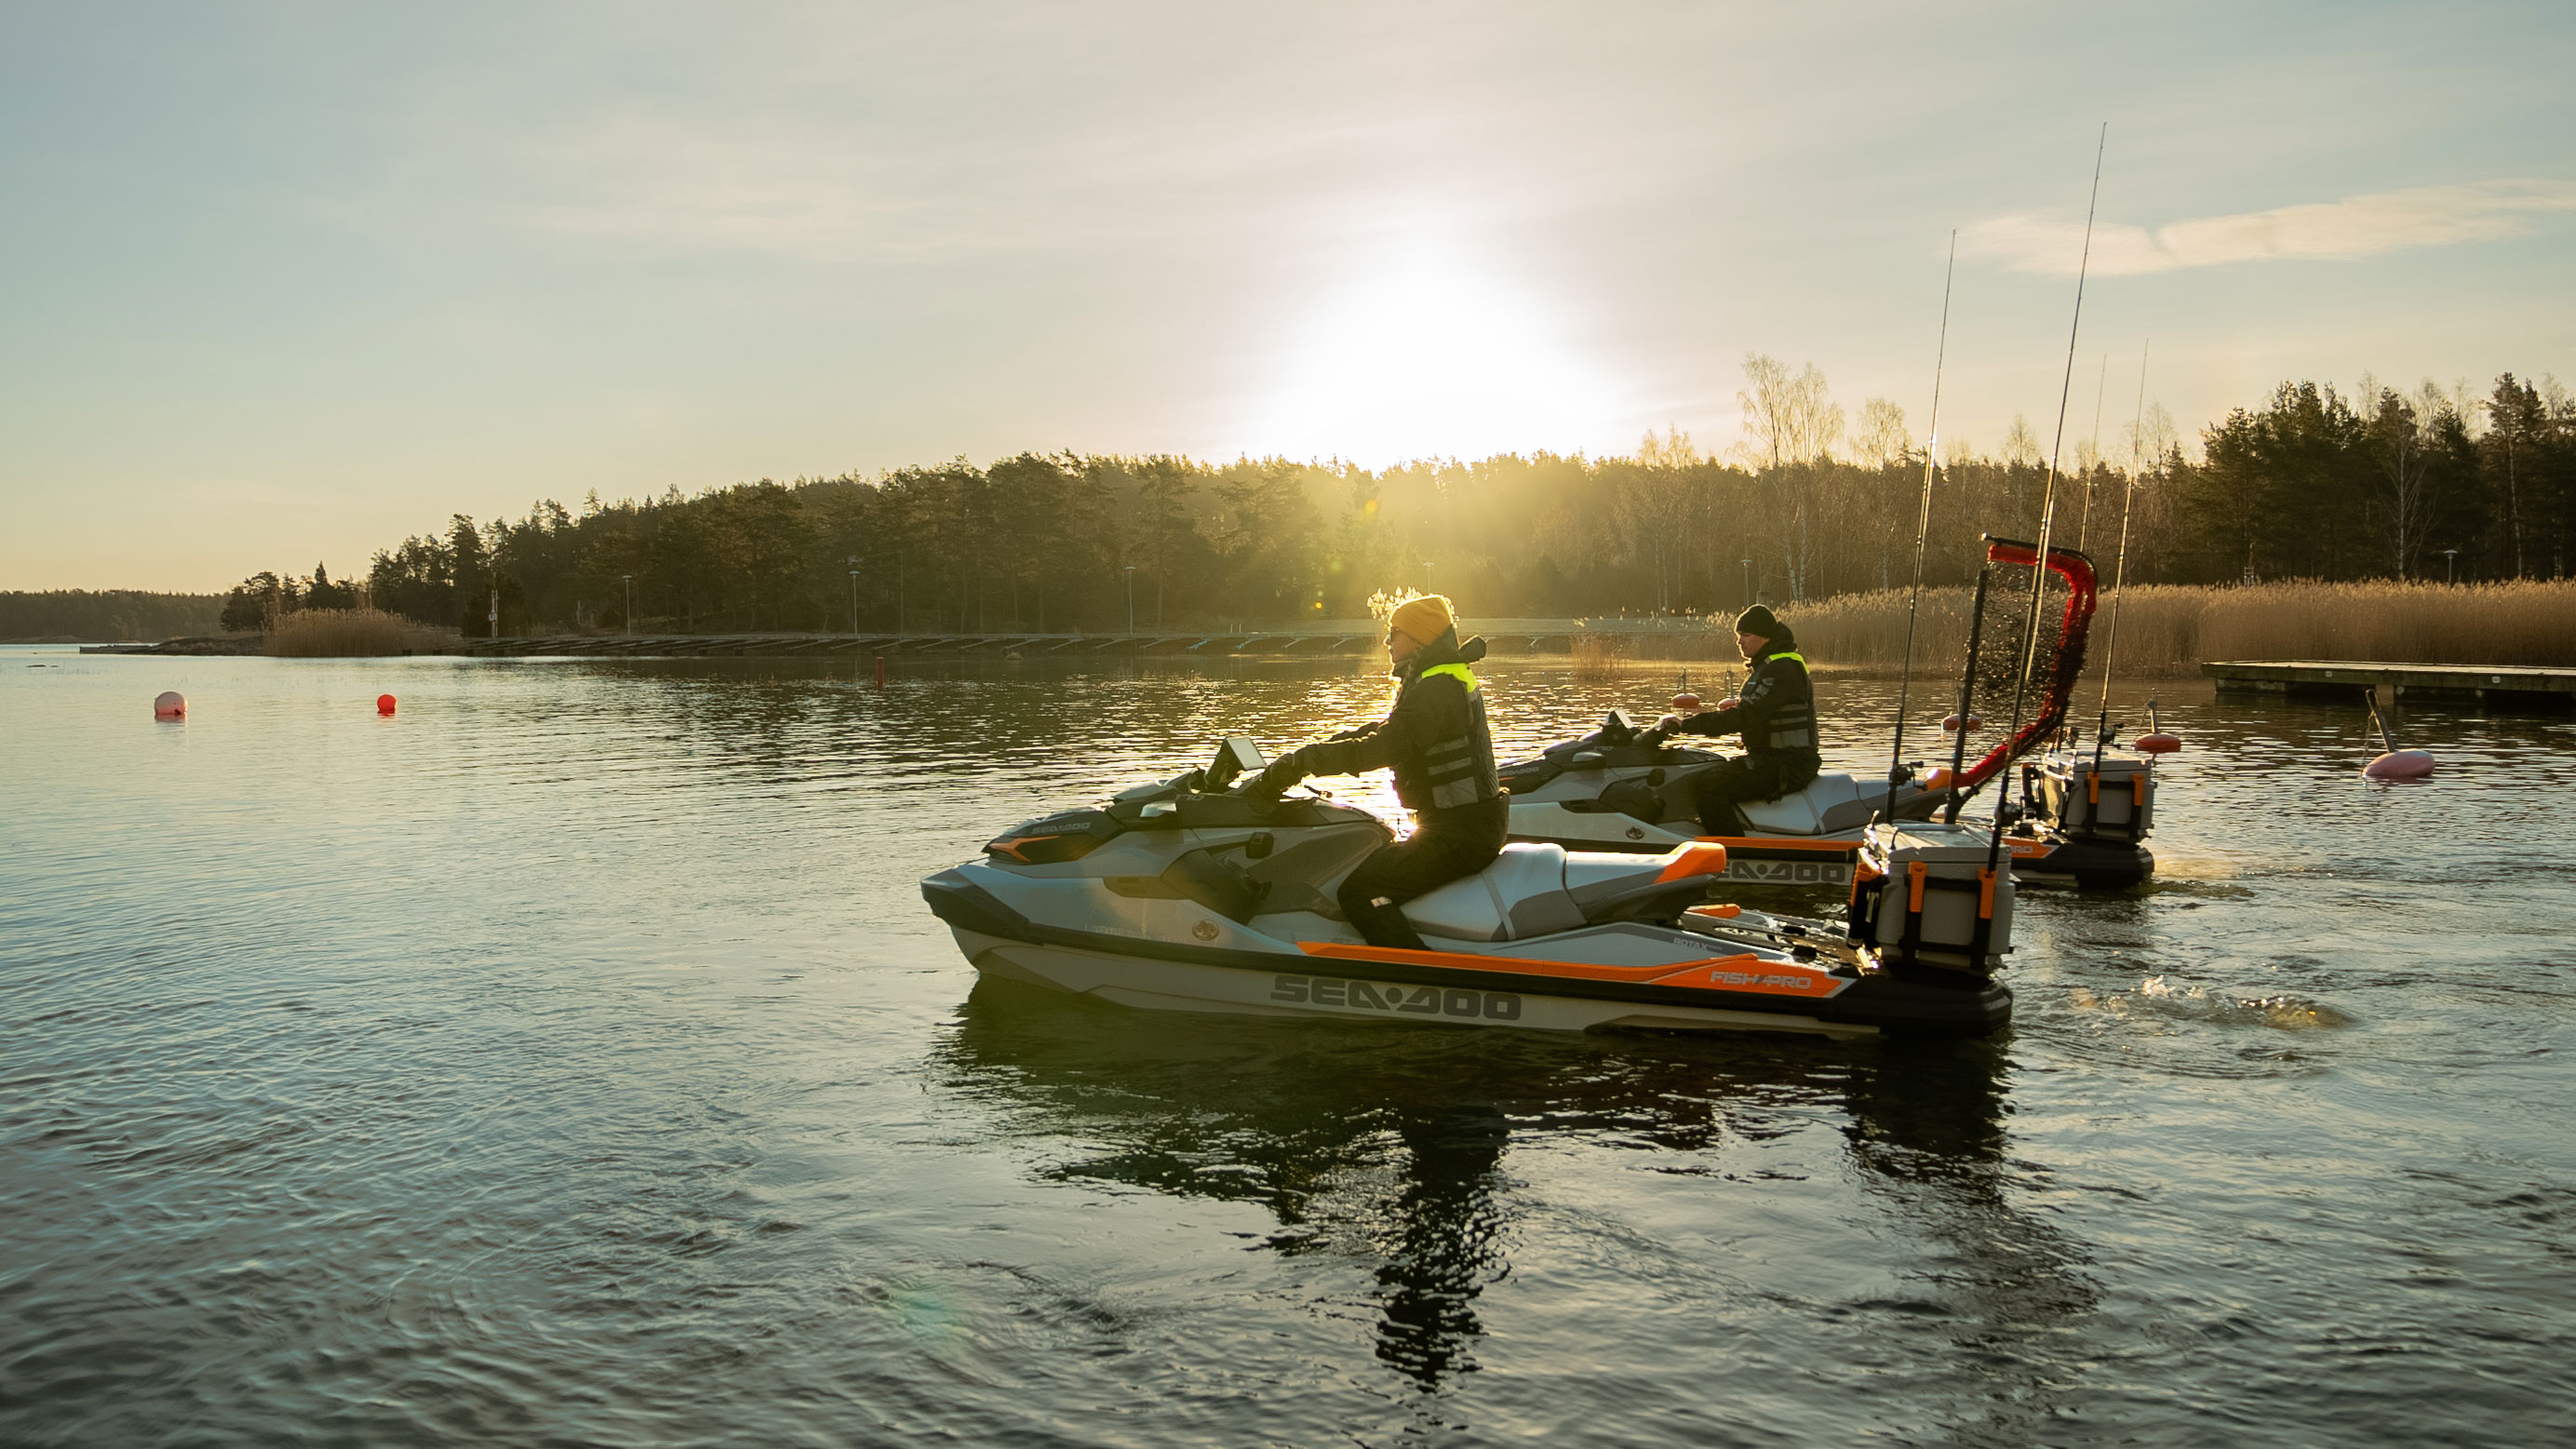 Matilda and her boyfriend riding Sea-Doo PWC at sunset in Lake Vänern, Sweden